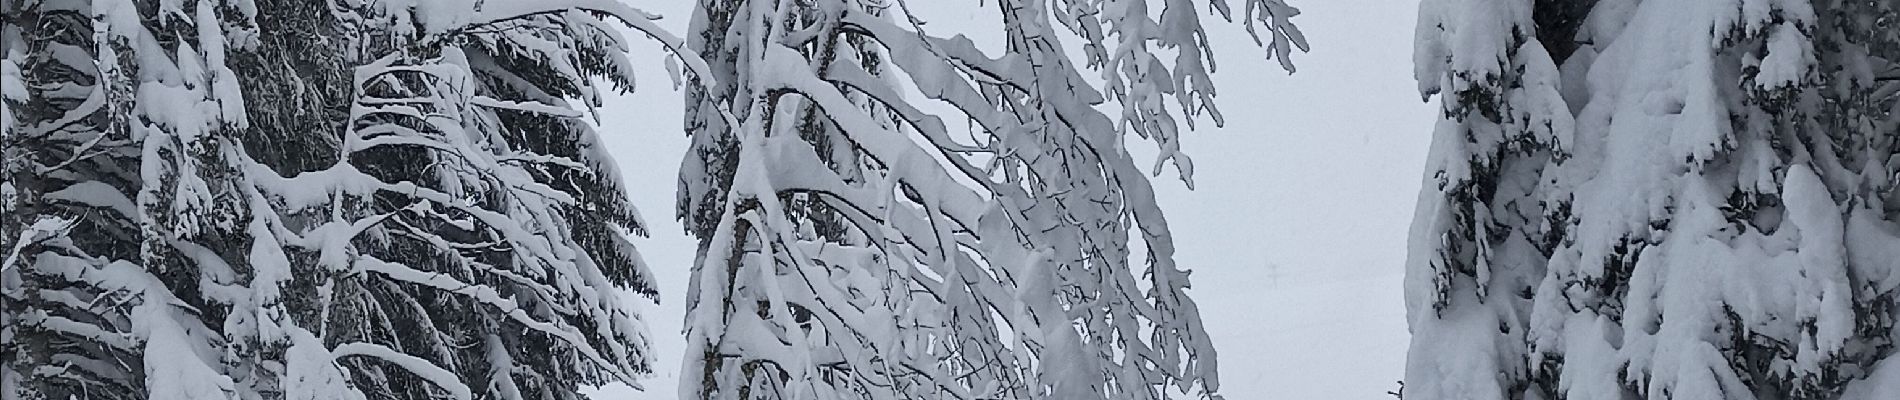 Tocht Sneeuwschoenen La Pesse - Ambossieux /La Pesse par tire fesse  - Photo